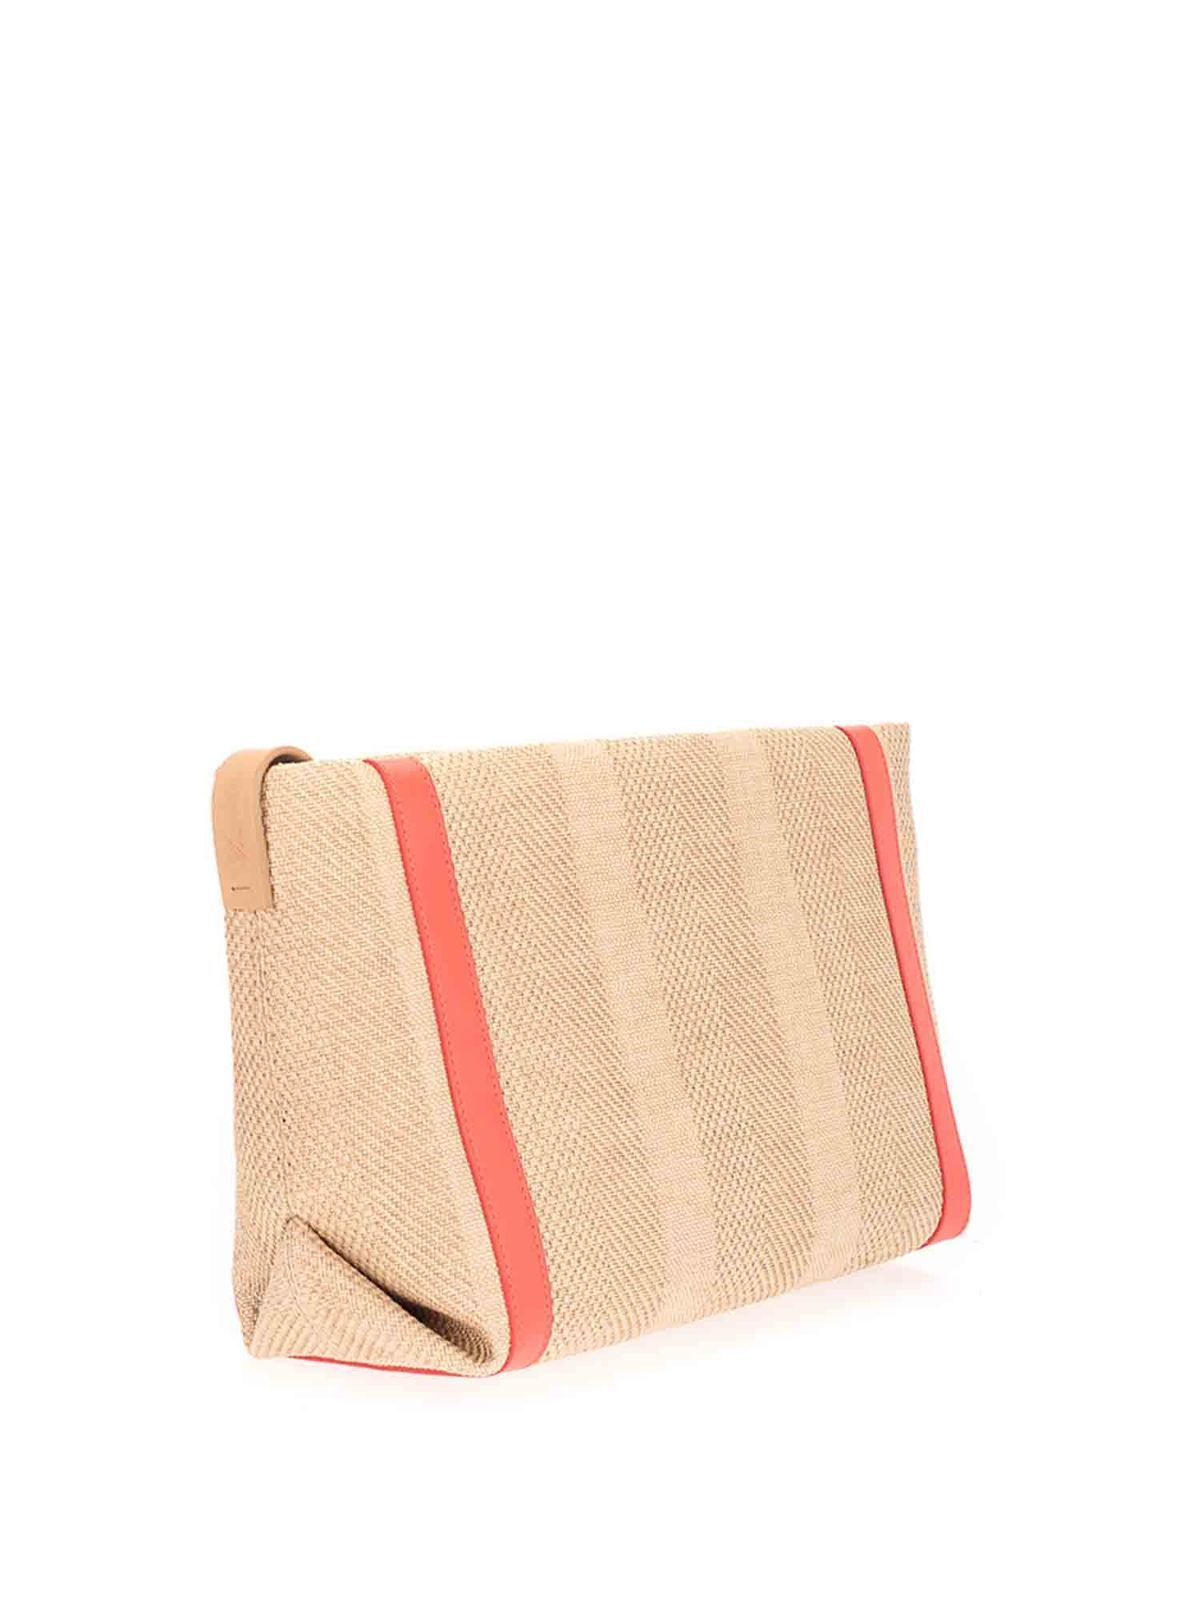 Clutches Loro Piana - Fabric clutch bag in Natural and Sunrise colo -  FAL6394F2D6